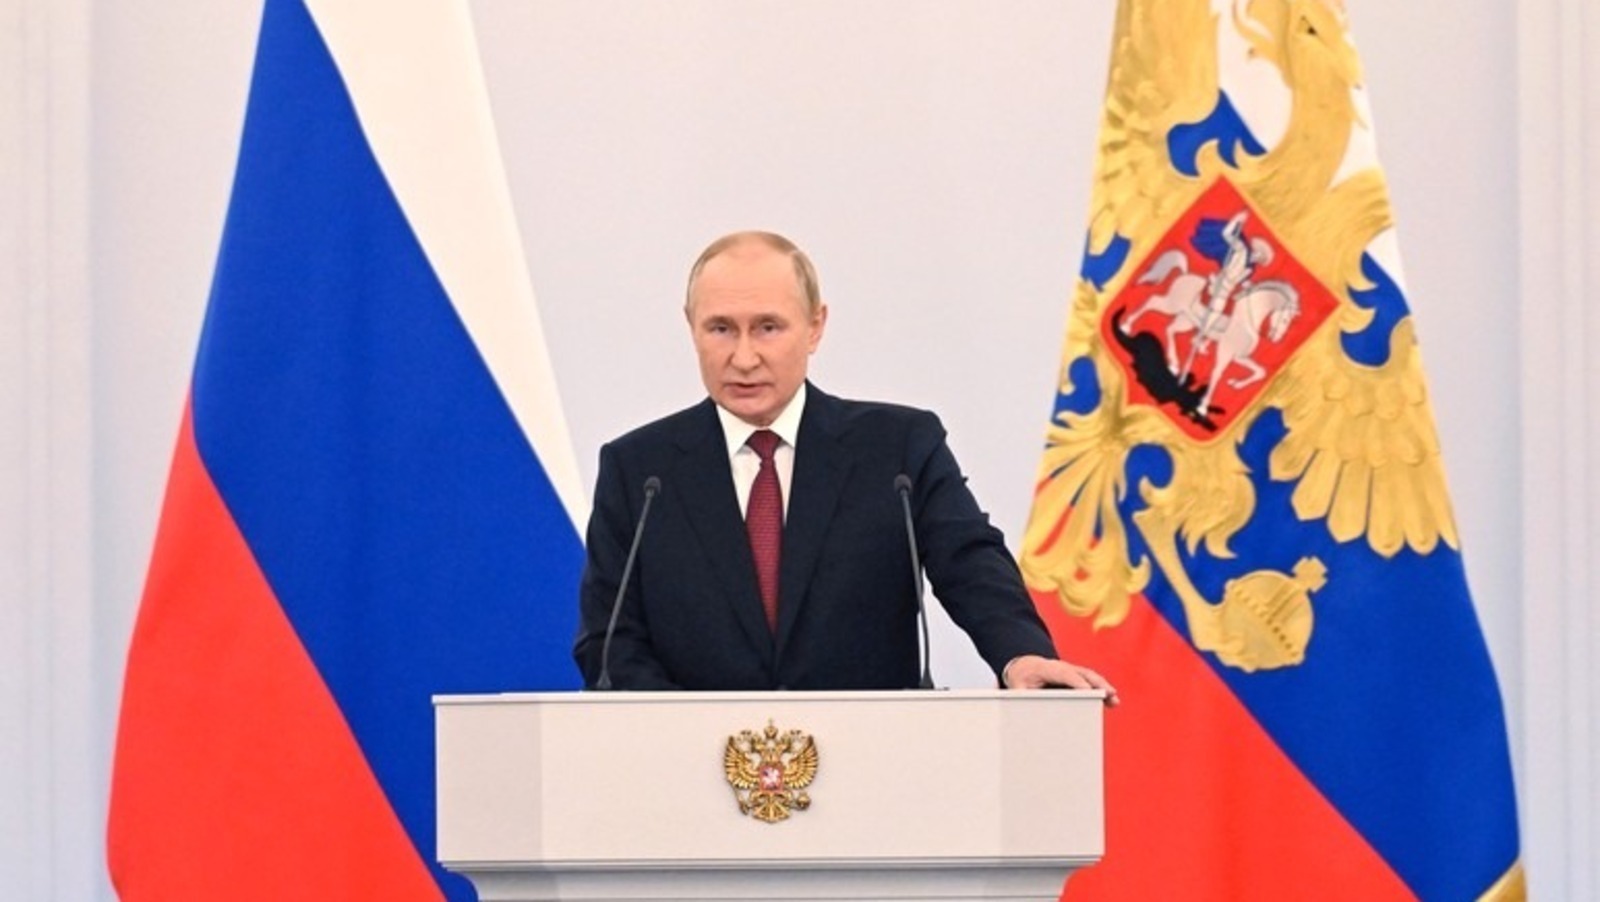 Владимир Путин рәсәйҙәрҙең өс категорияһы өсөн мобилизацияны кисектереү тураһында указға ҡул ҡуйҙы